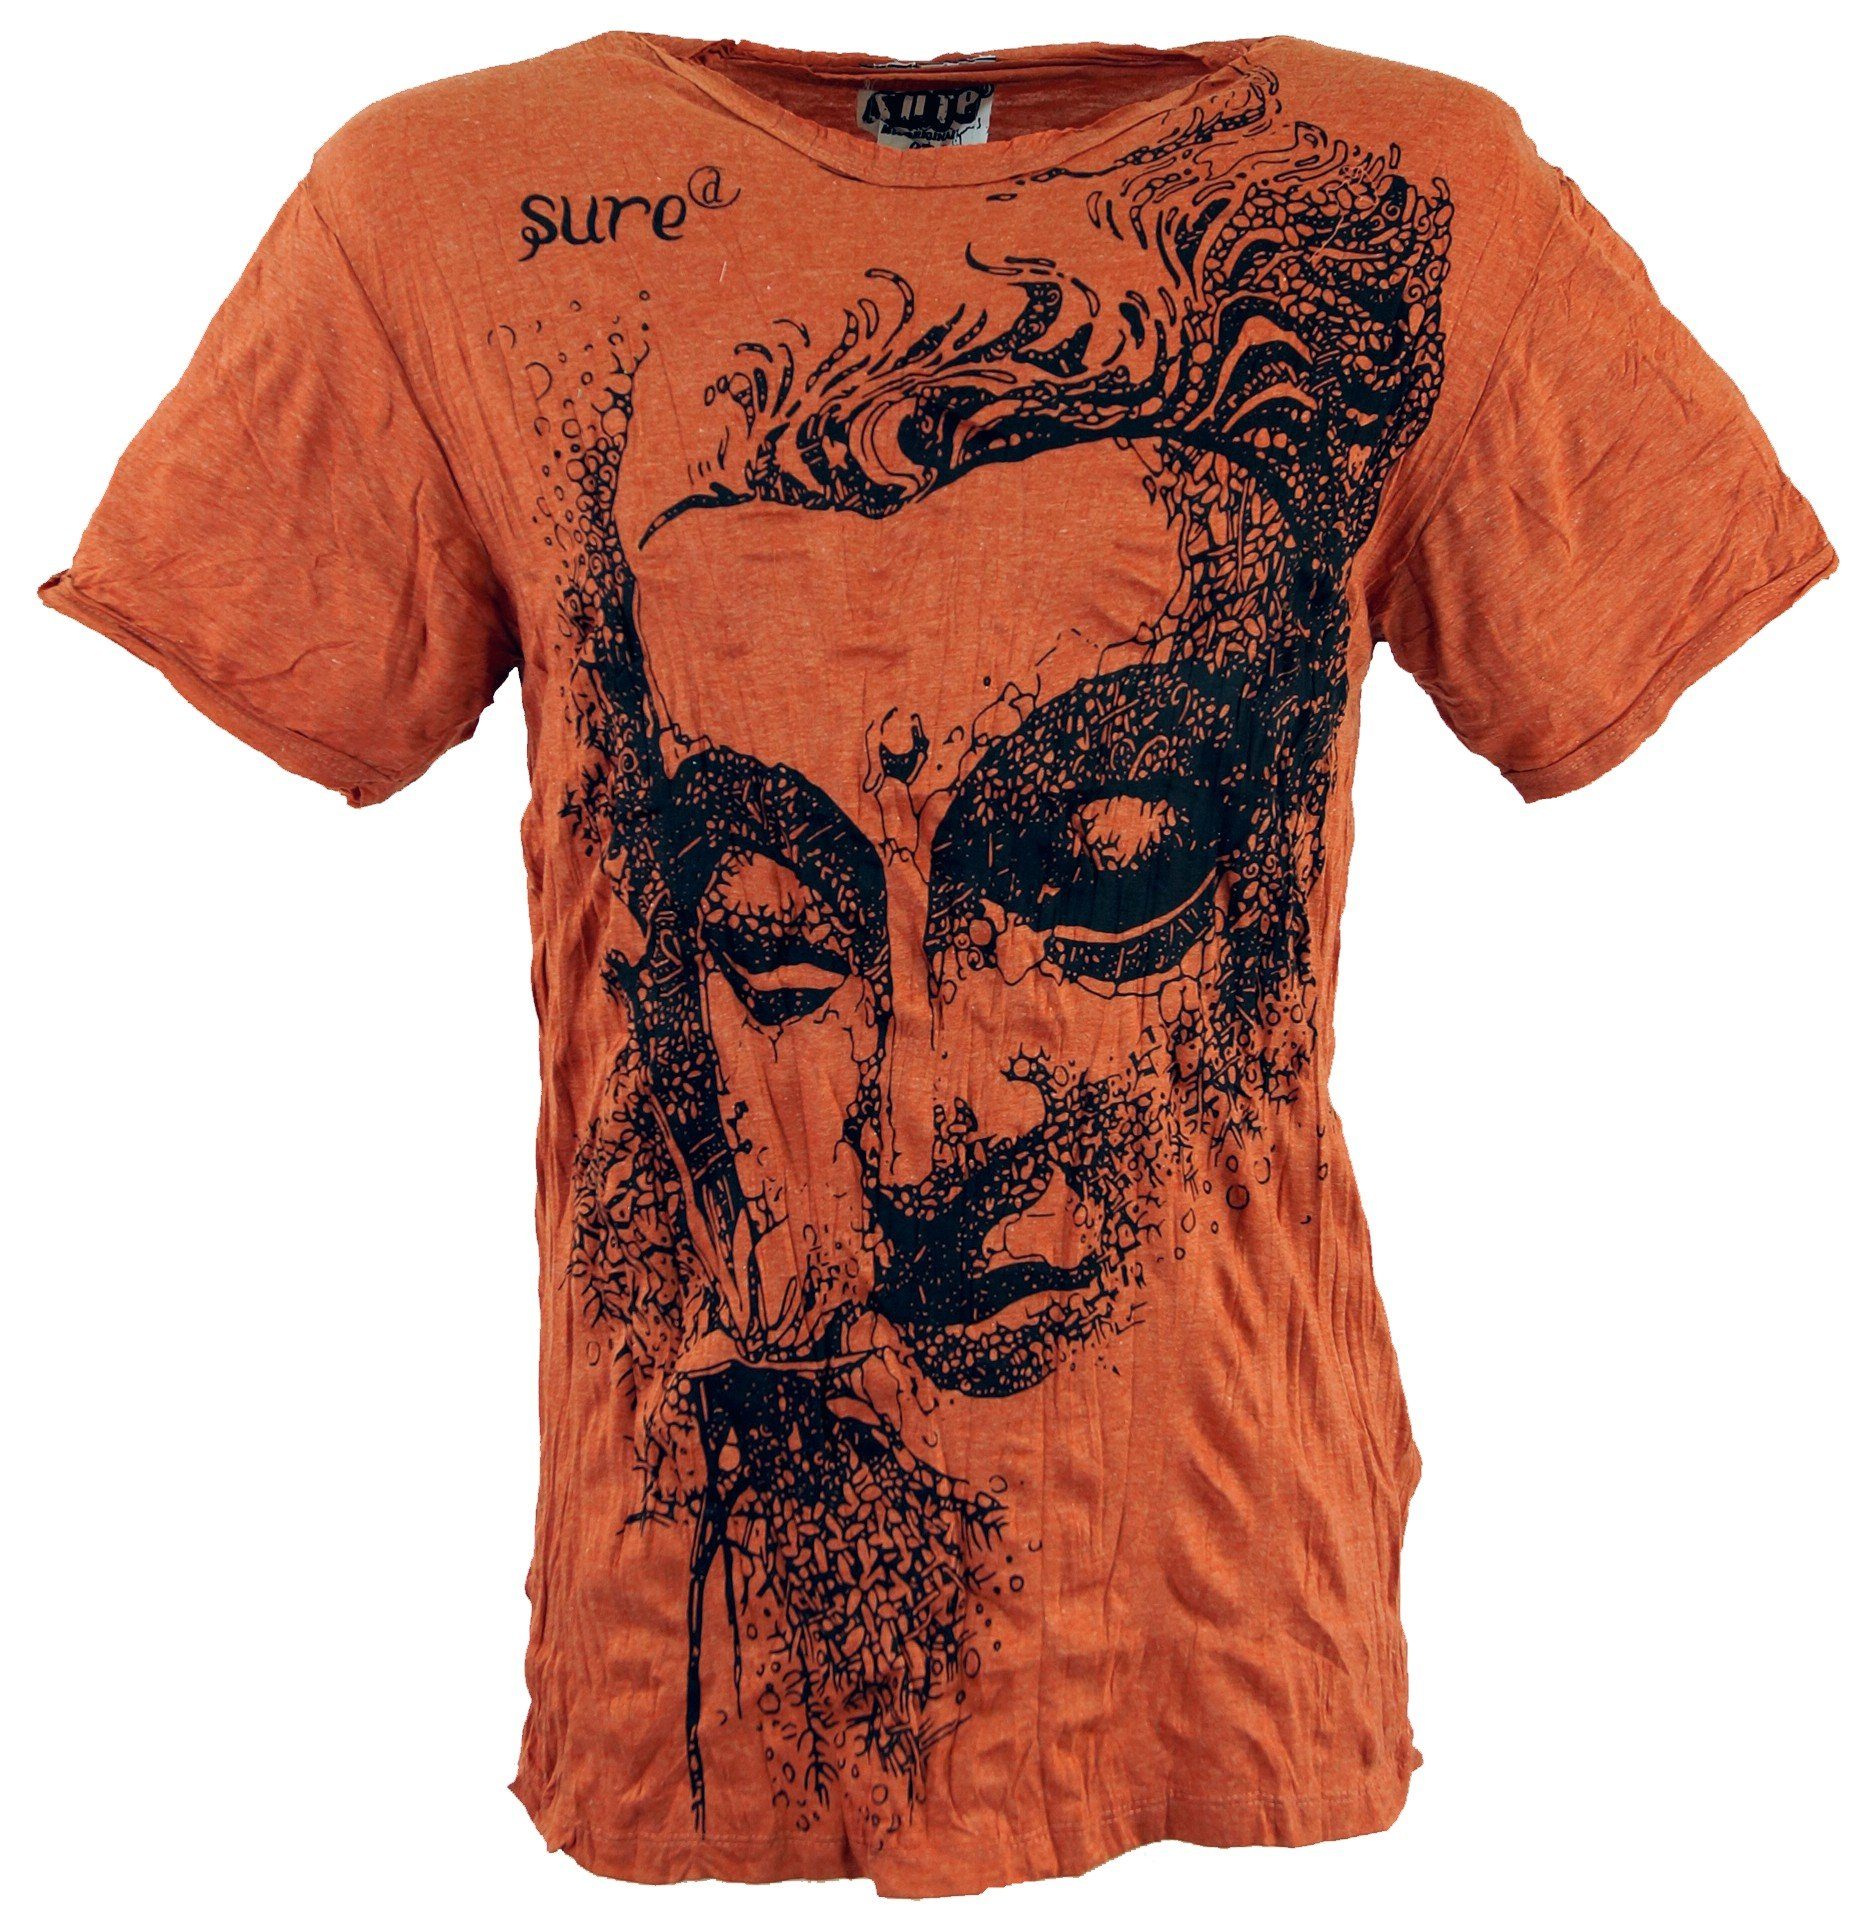 Bekleidung T-Shirt alternative Guru-Shop rostorange Goa Sure Style, - Buddha T-Shirt Festival,